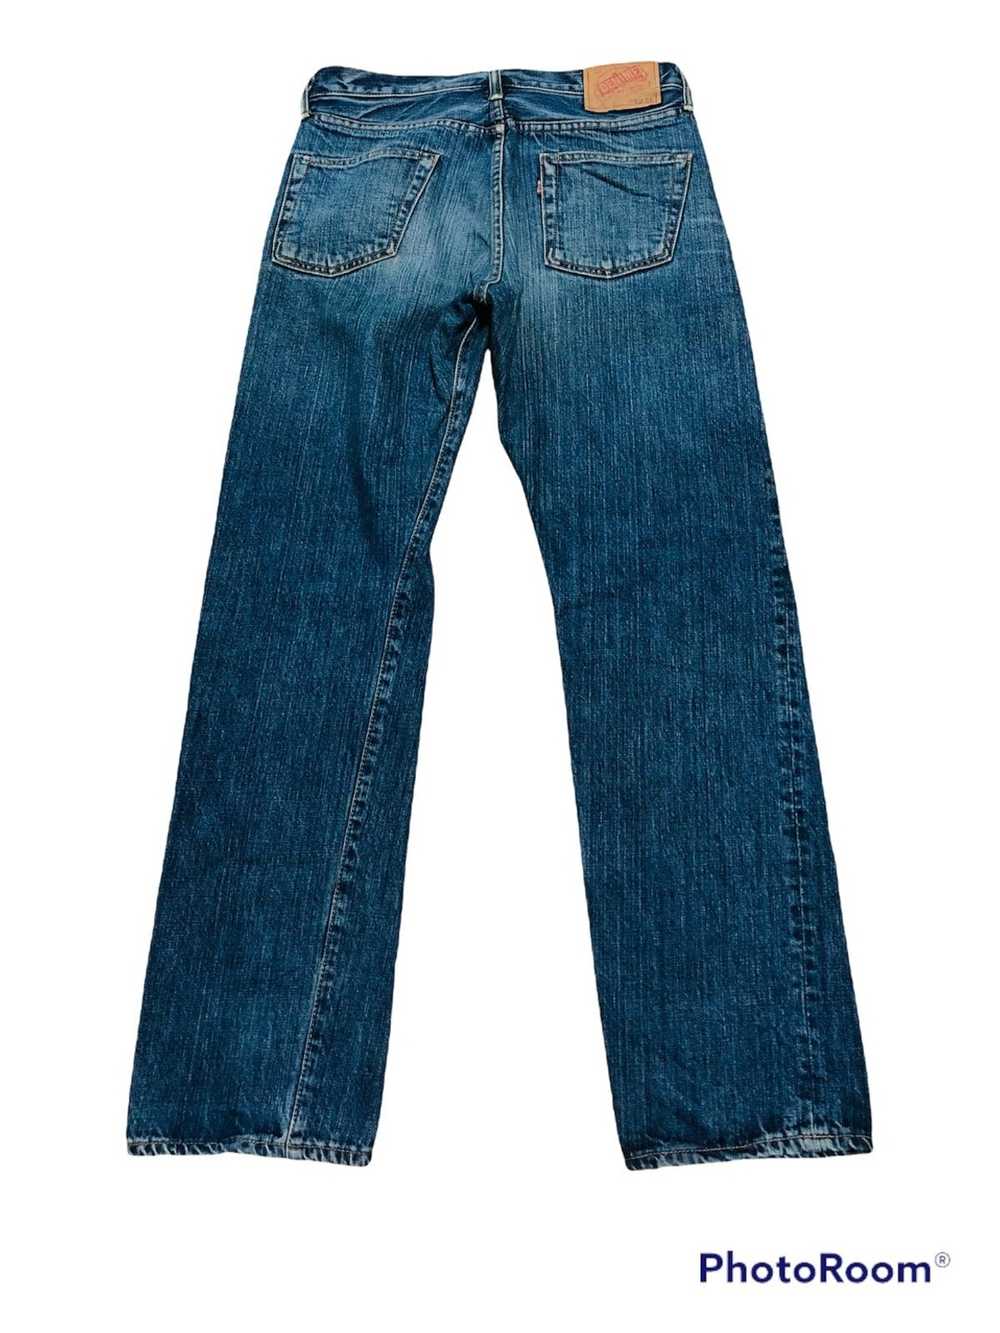 Denime Vintage Denime Jeans Non Selvedge - image 2